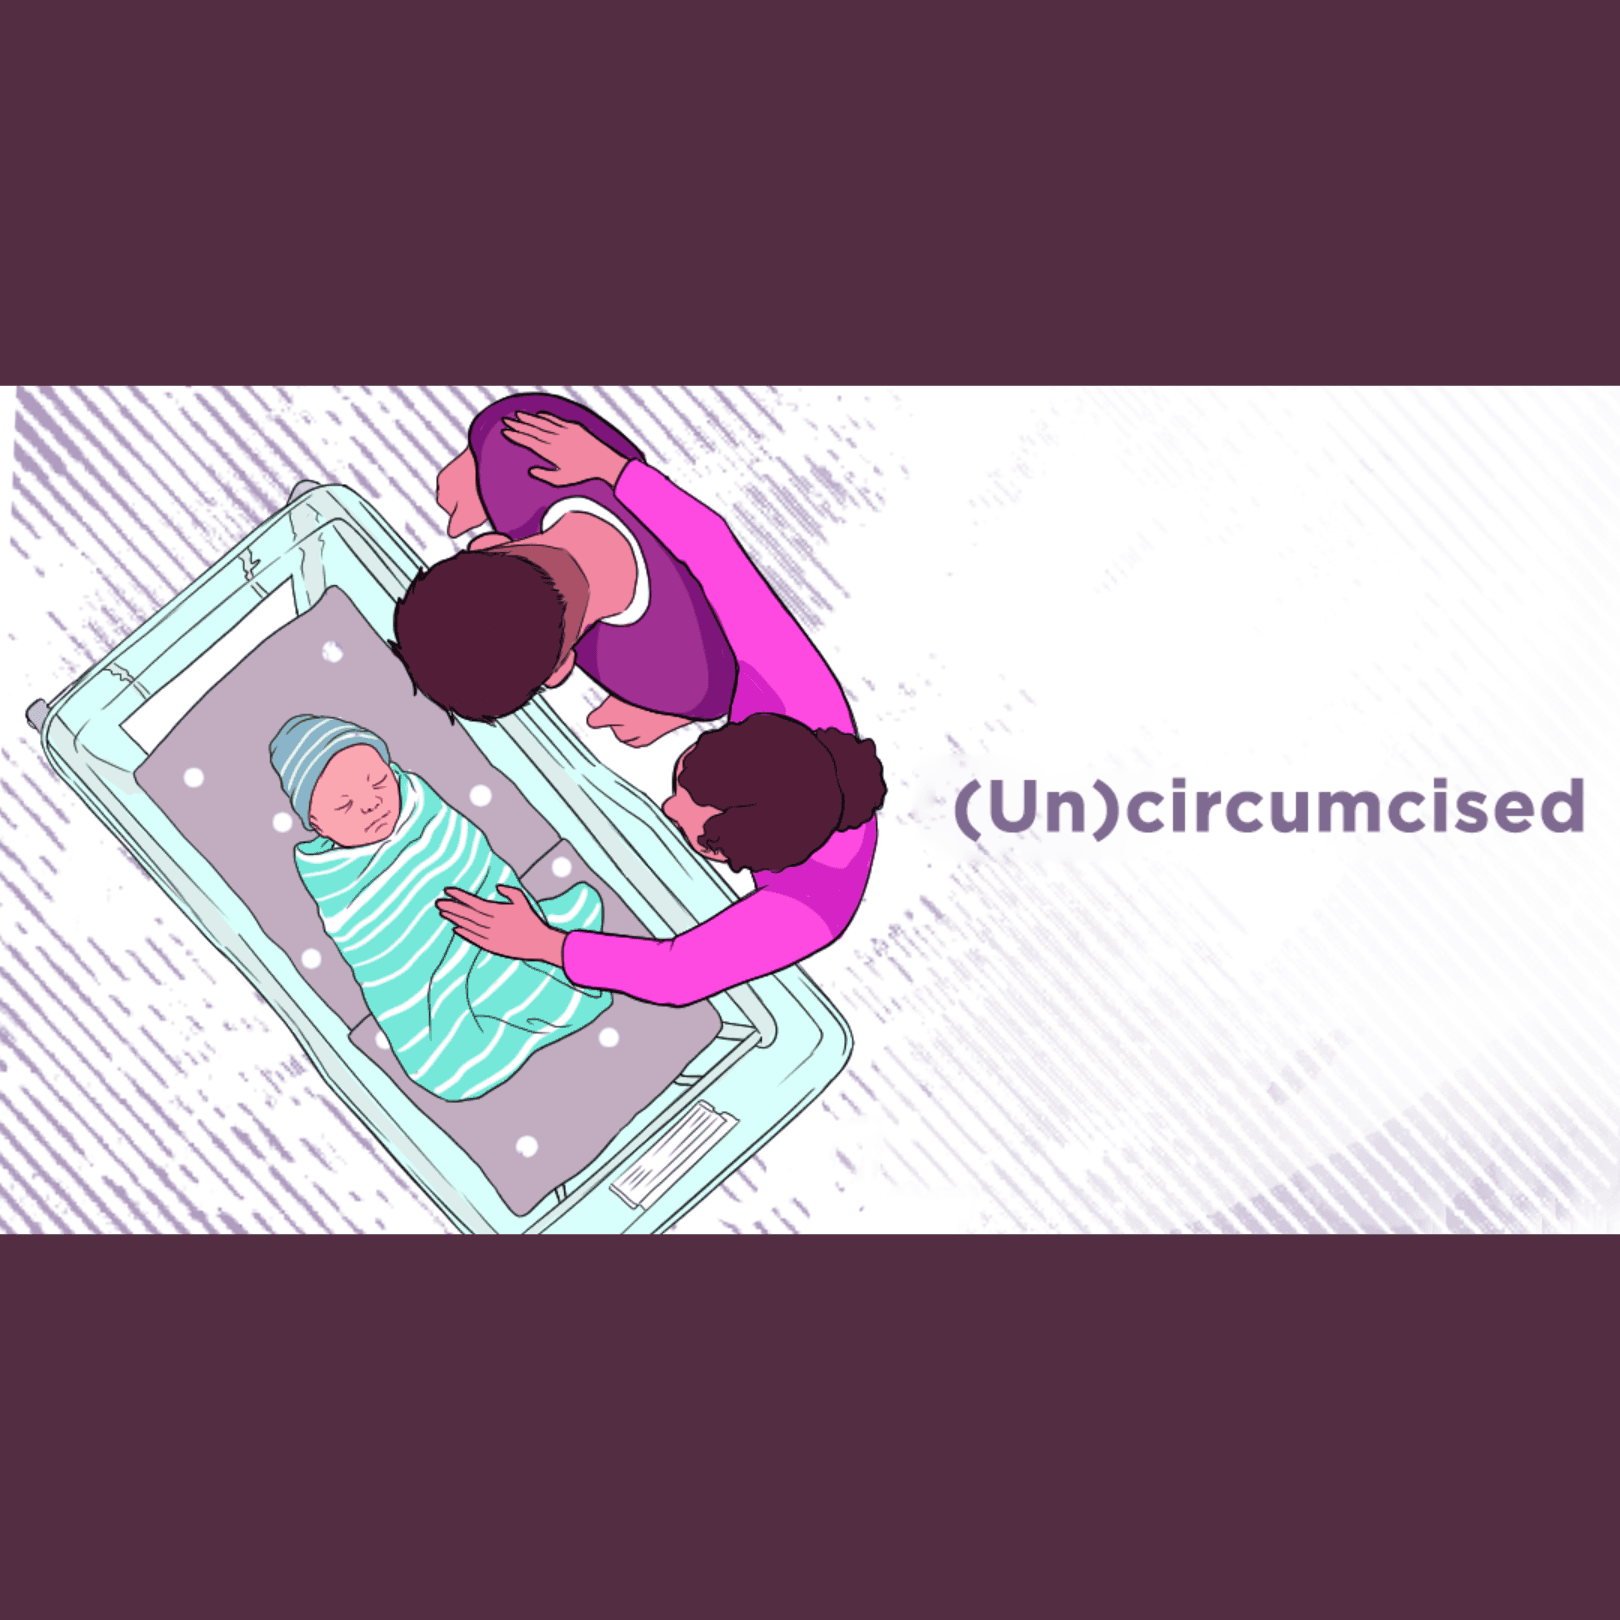 Thumbnail for "(Un)Circumcised: How Parents Decide".